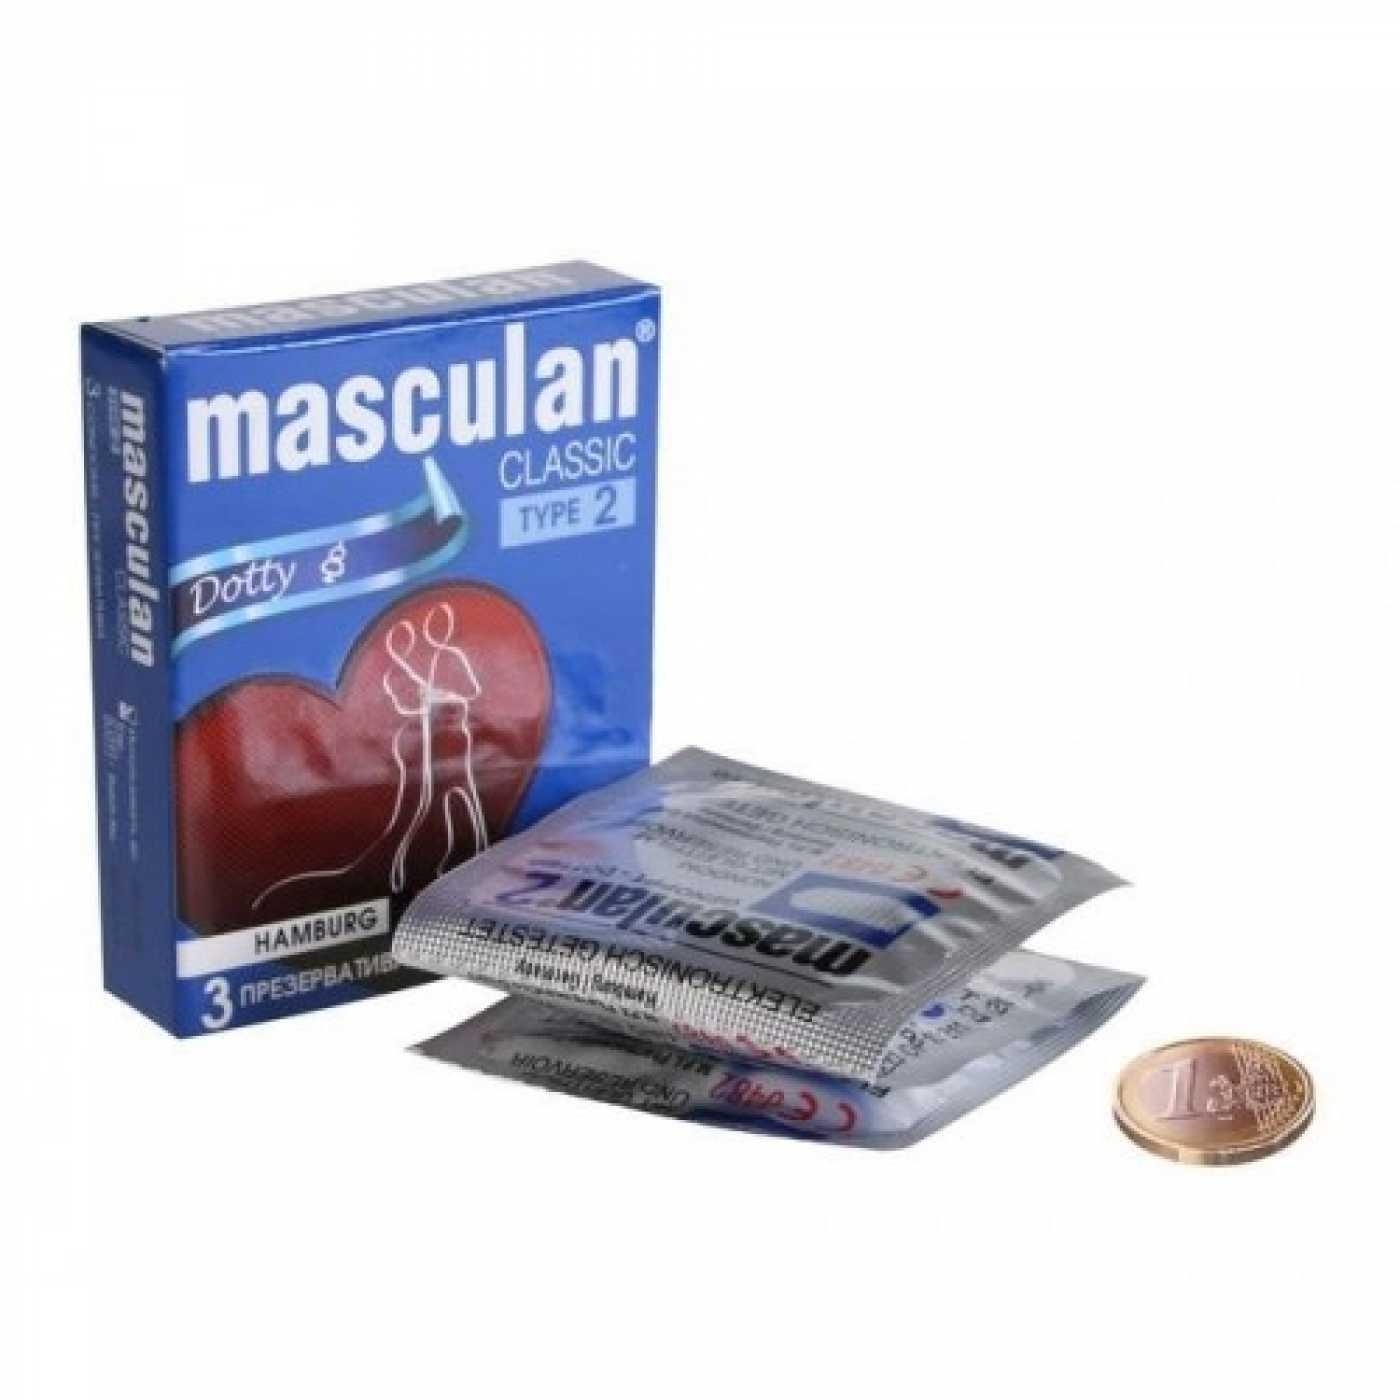 Masculan презервативы с пупырышк Classic 2, 3 шт.